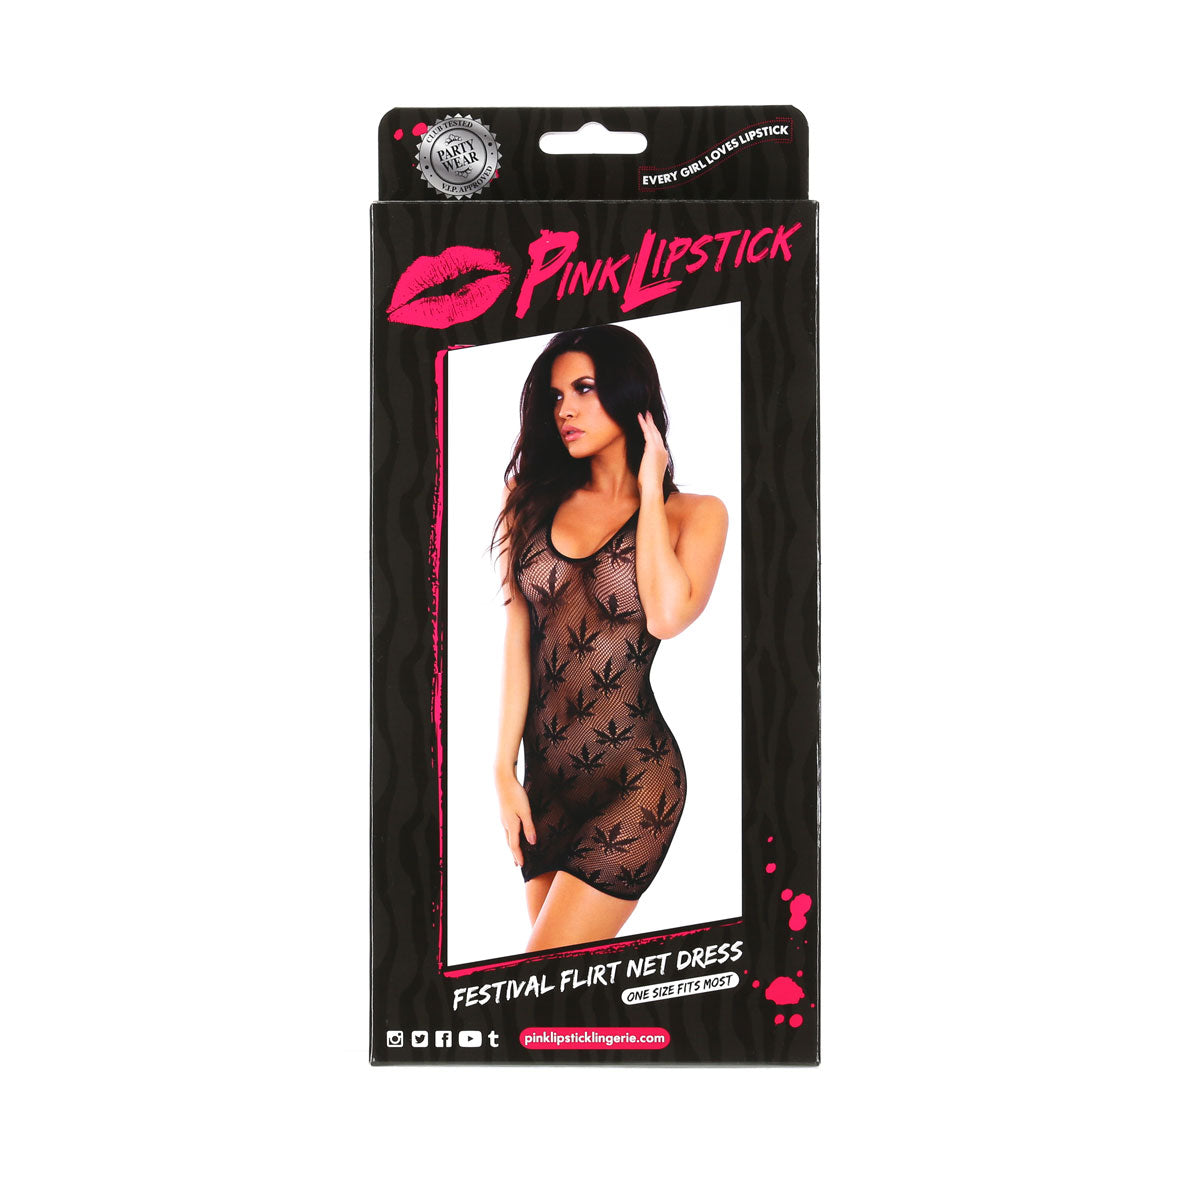 Pink Lipstick Festival Flirt Net Dress – Black – One Size